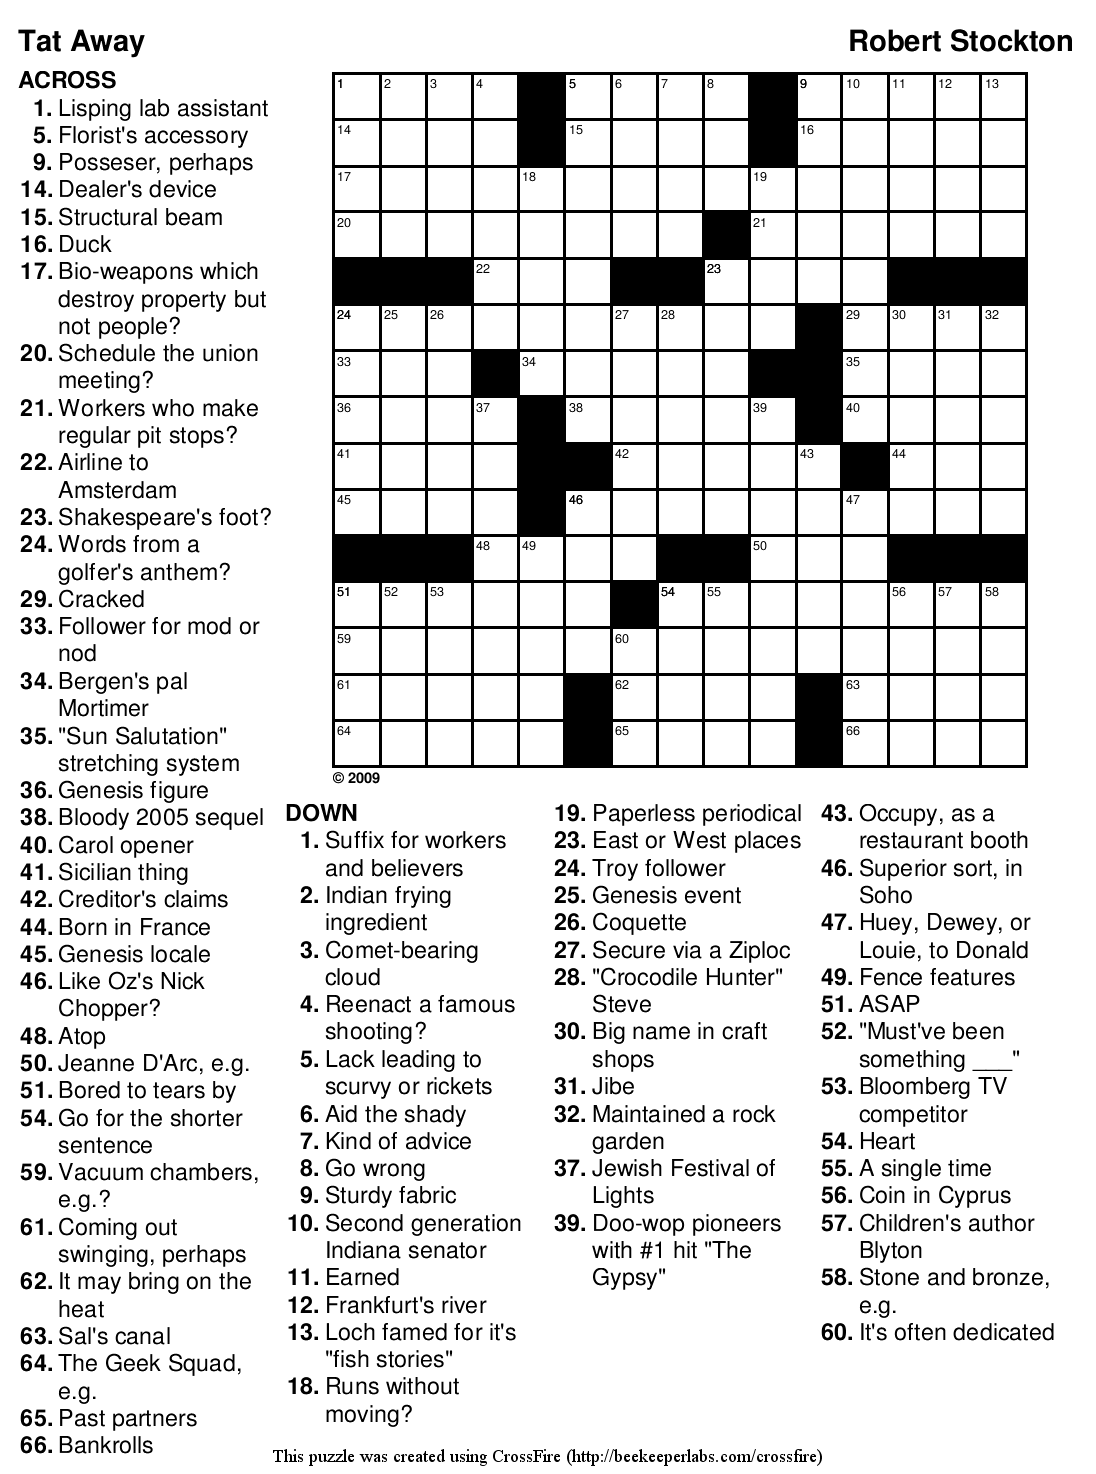 Easy Christian Crossword Puzzles Printable